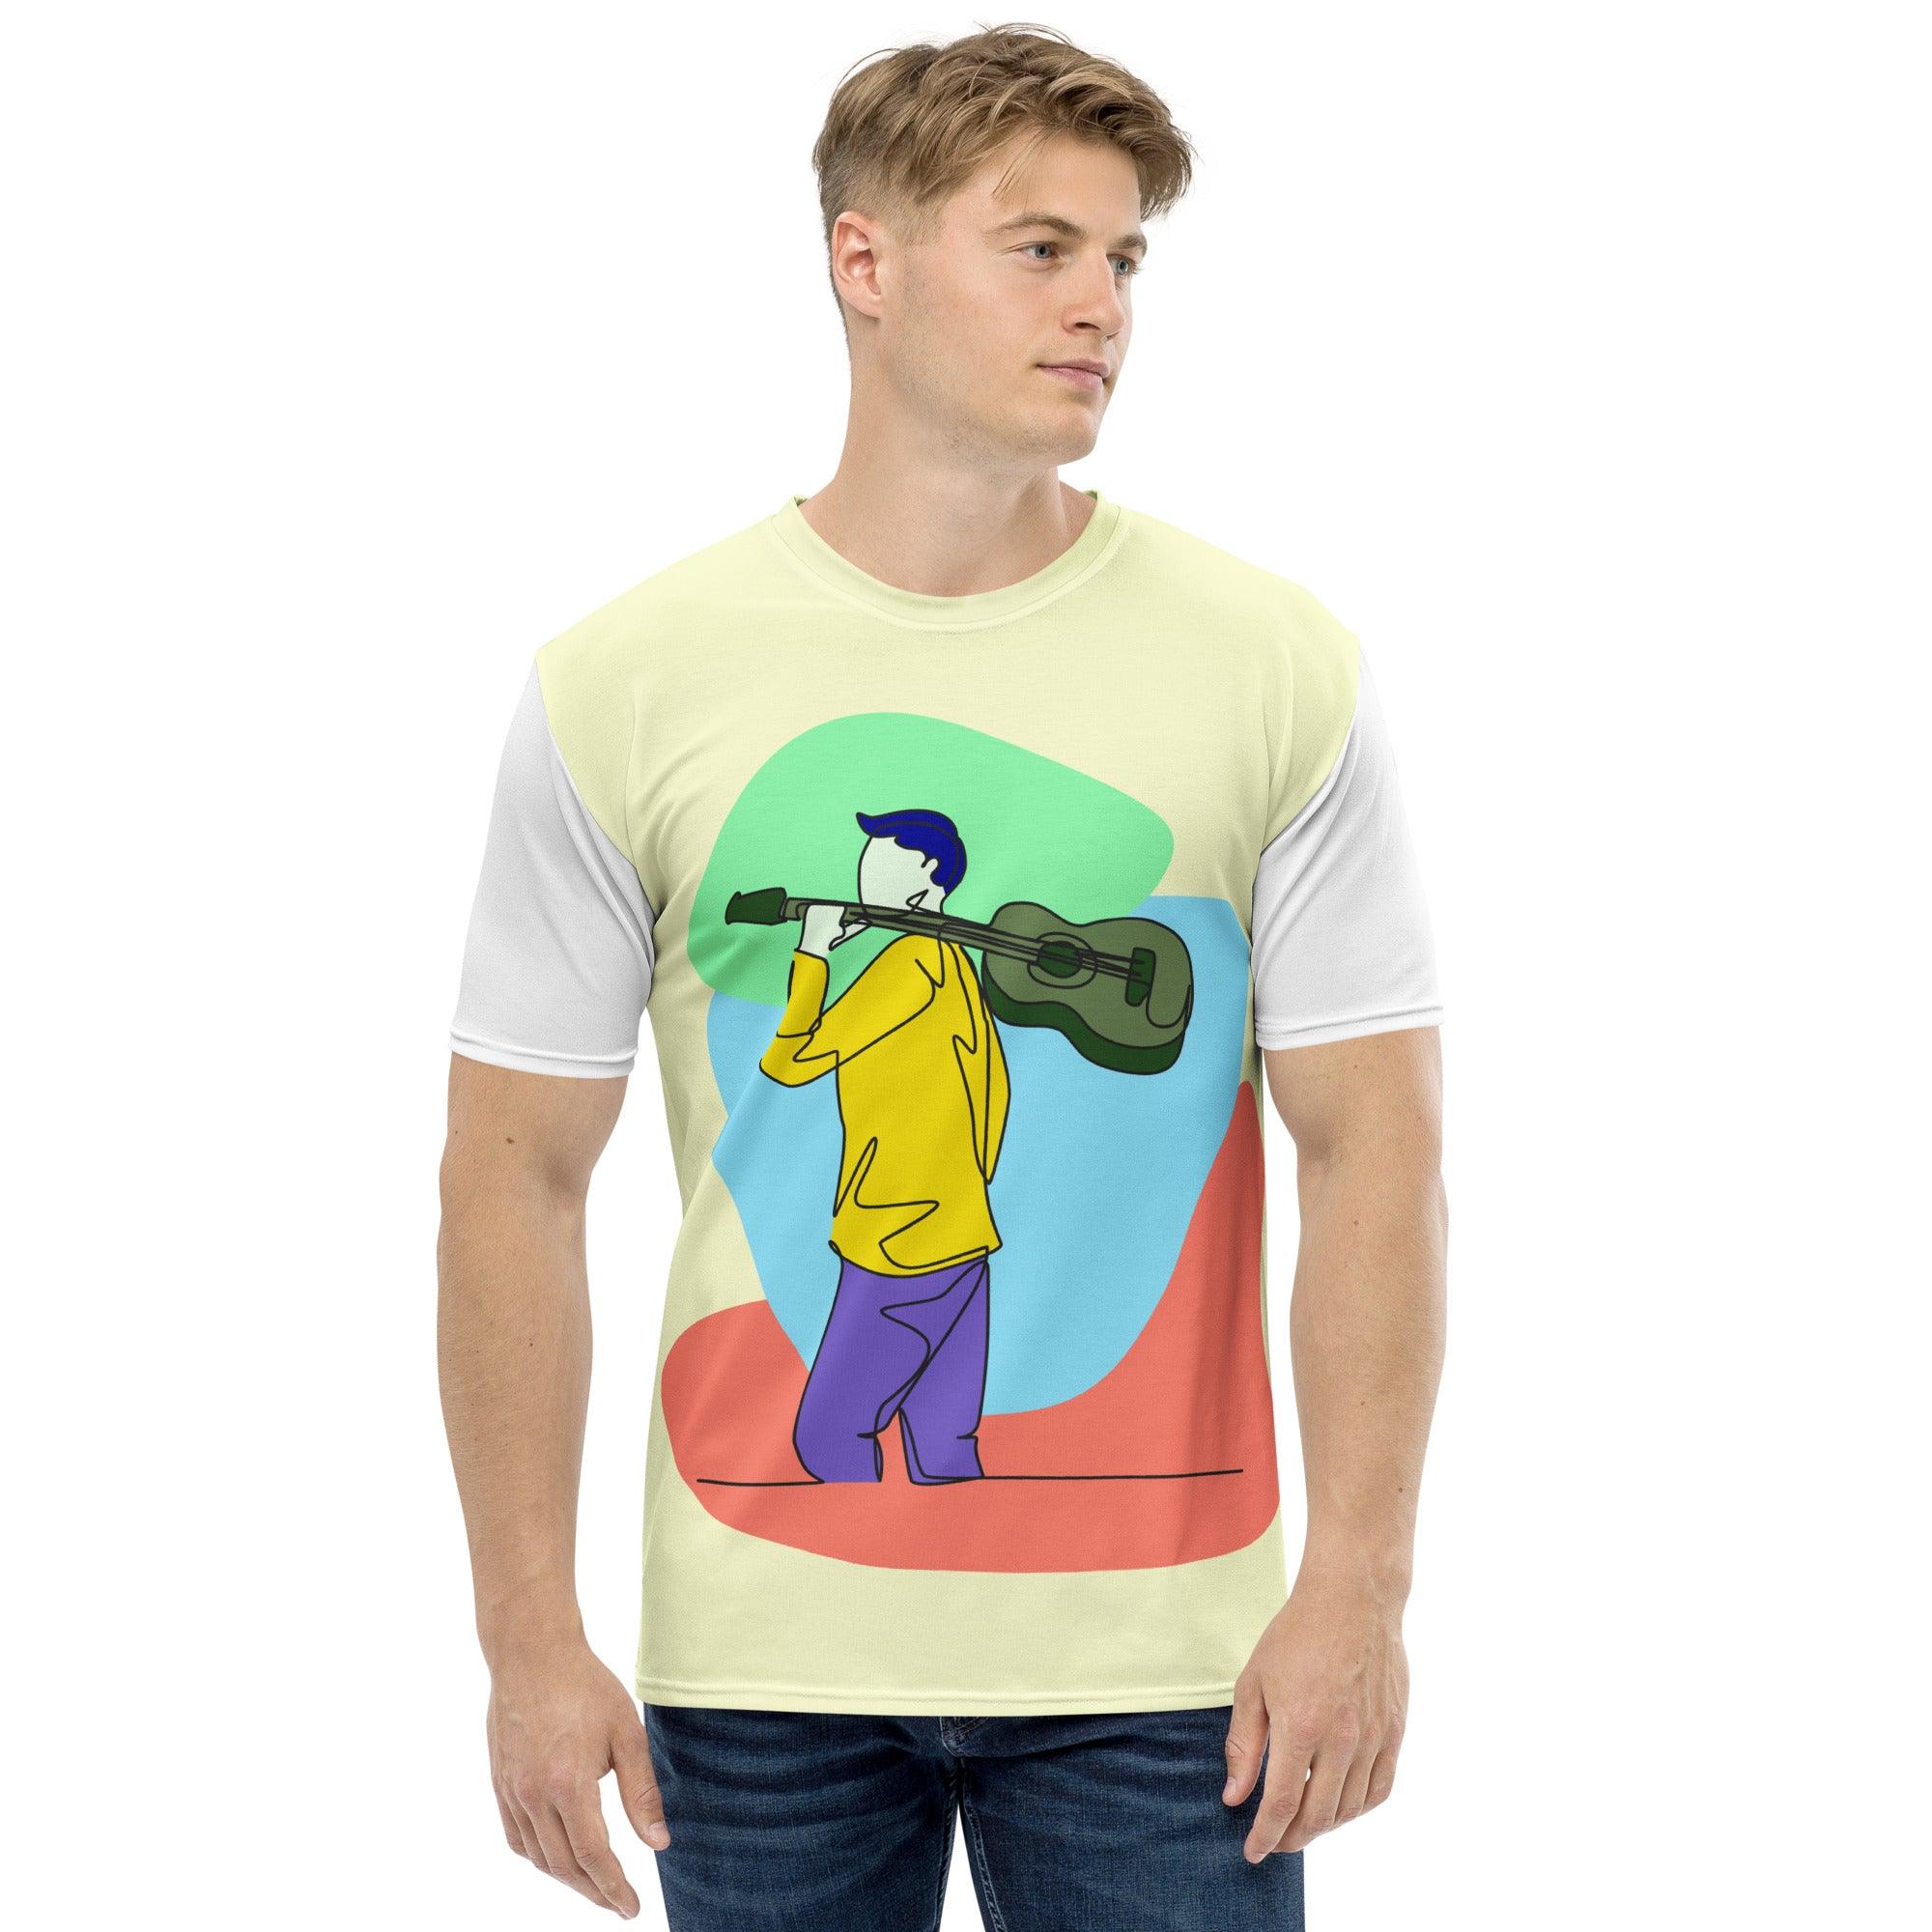 A Man With a Guitar At Half Speed Men's T-shirt - Beyond T-shirts